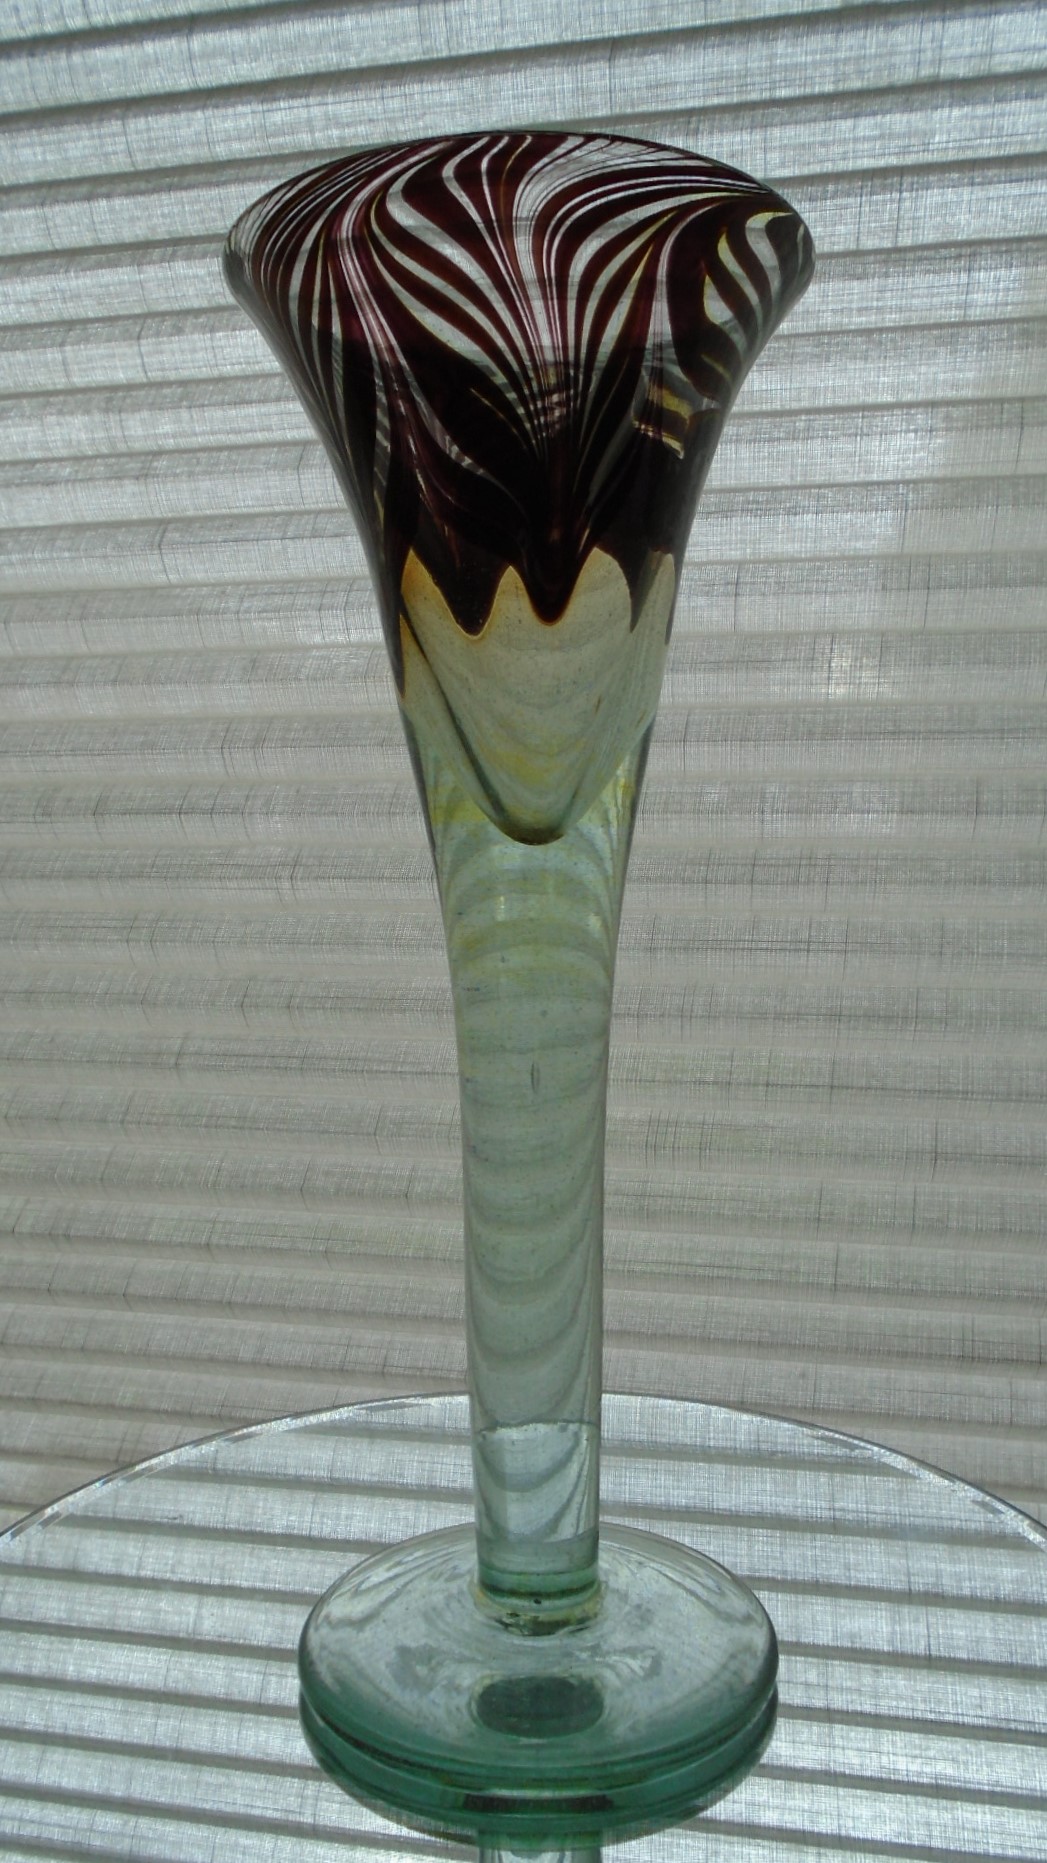 SIGNED GEORGE ELLIOTT BEWDLEY ART GLASS DRINKING GLASS GOBLET